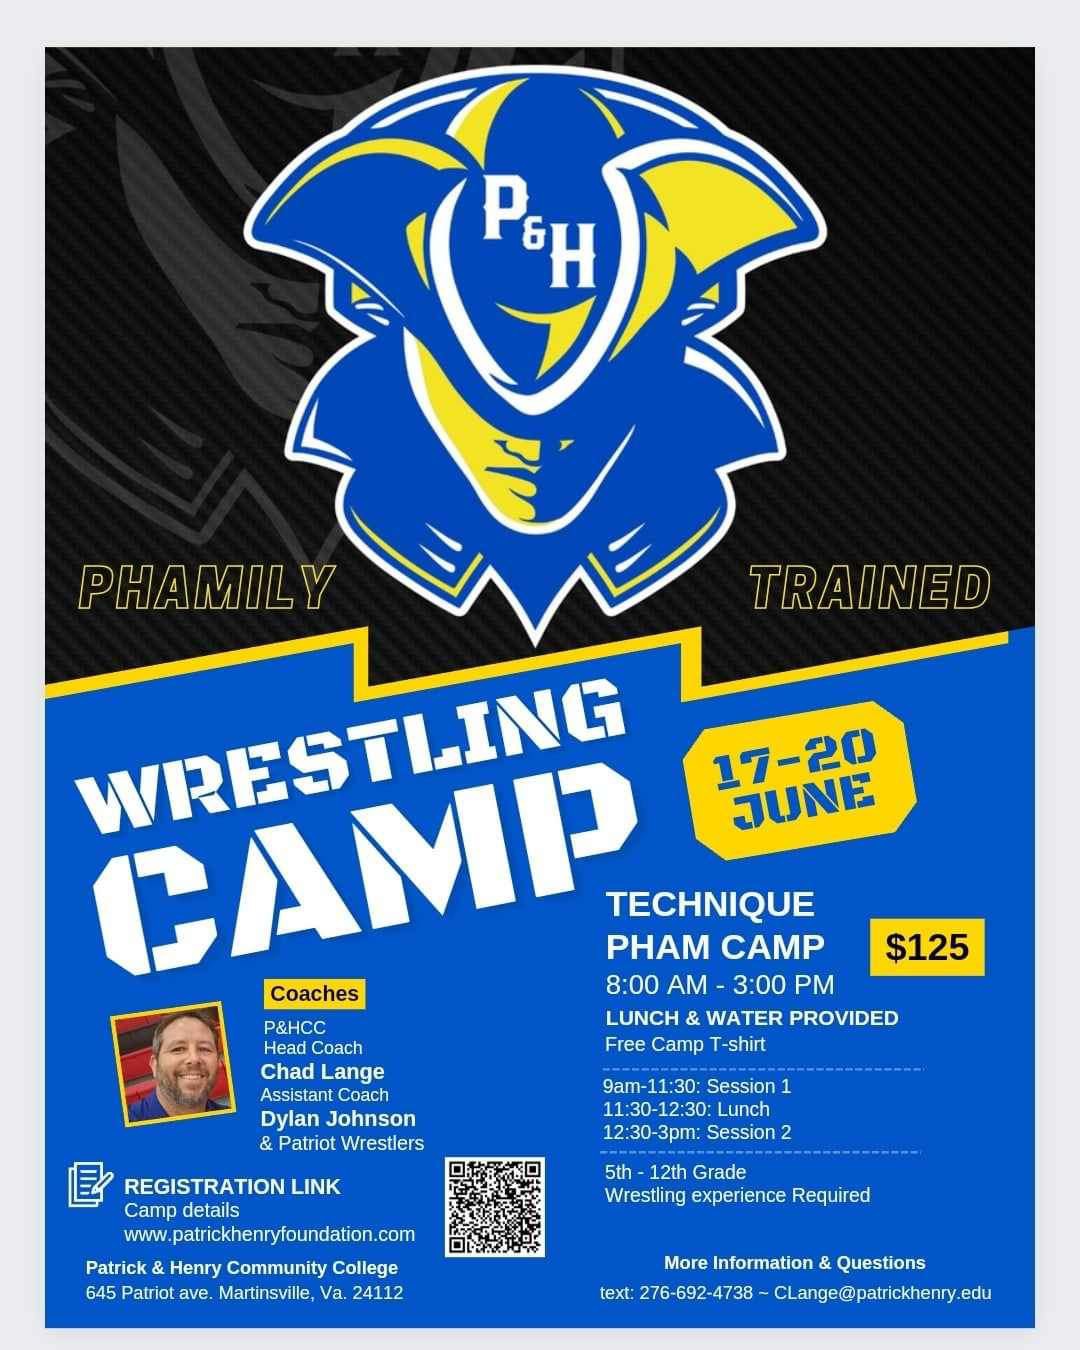 P&HCC Wrestling Camp Set for June 17-20